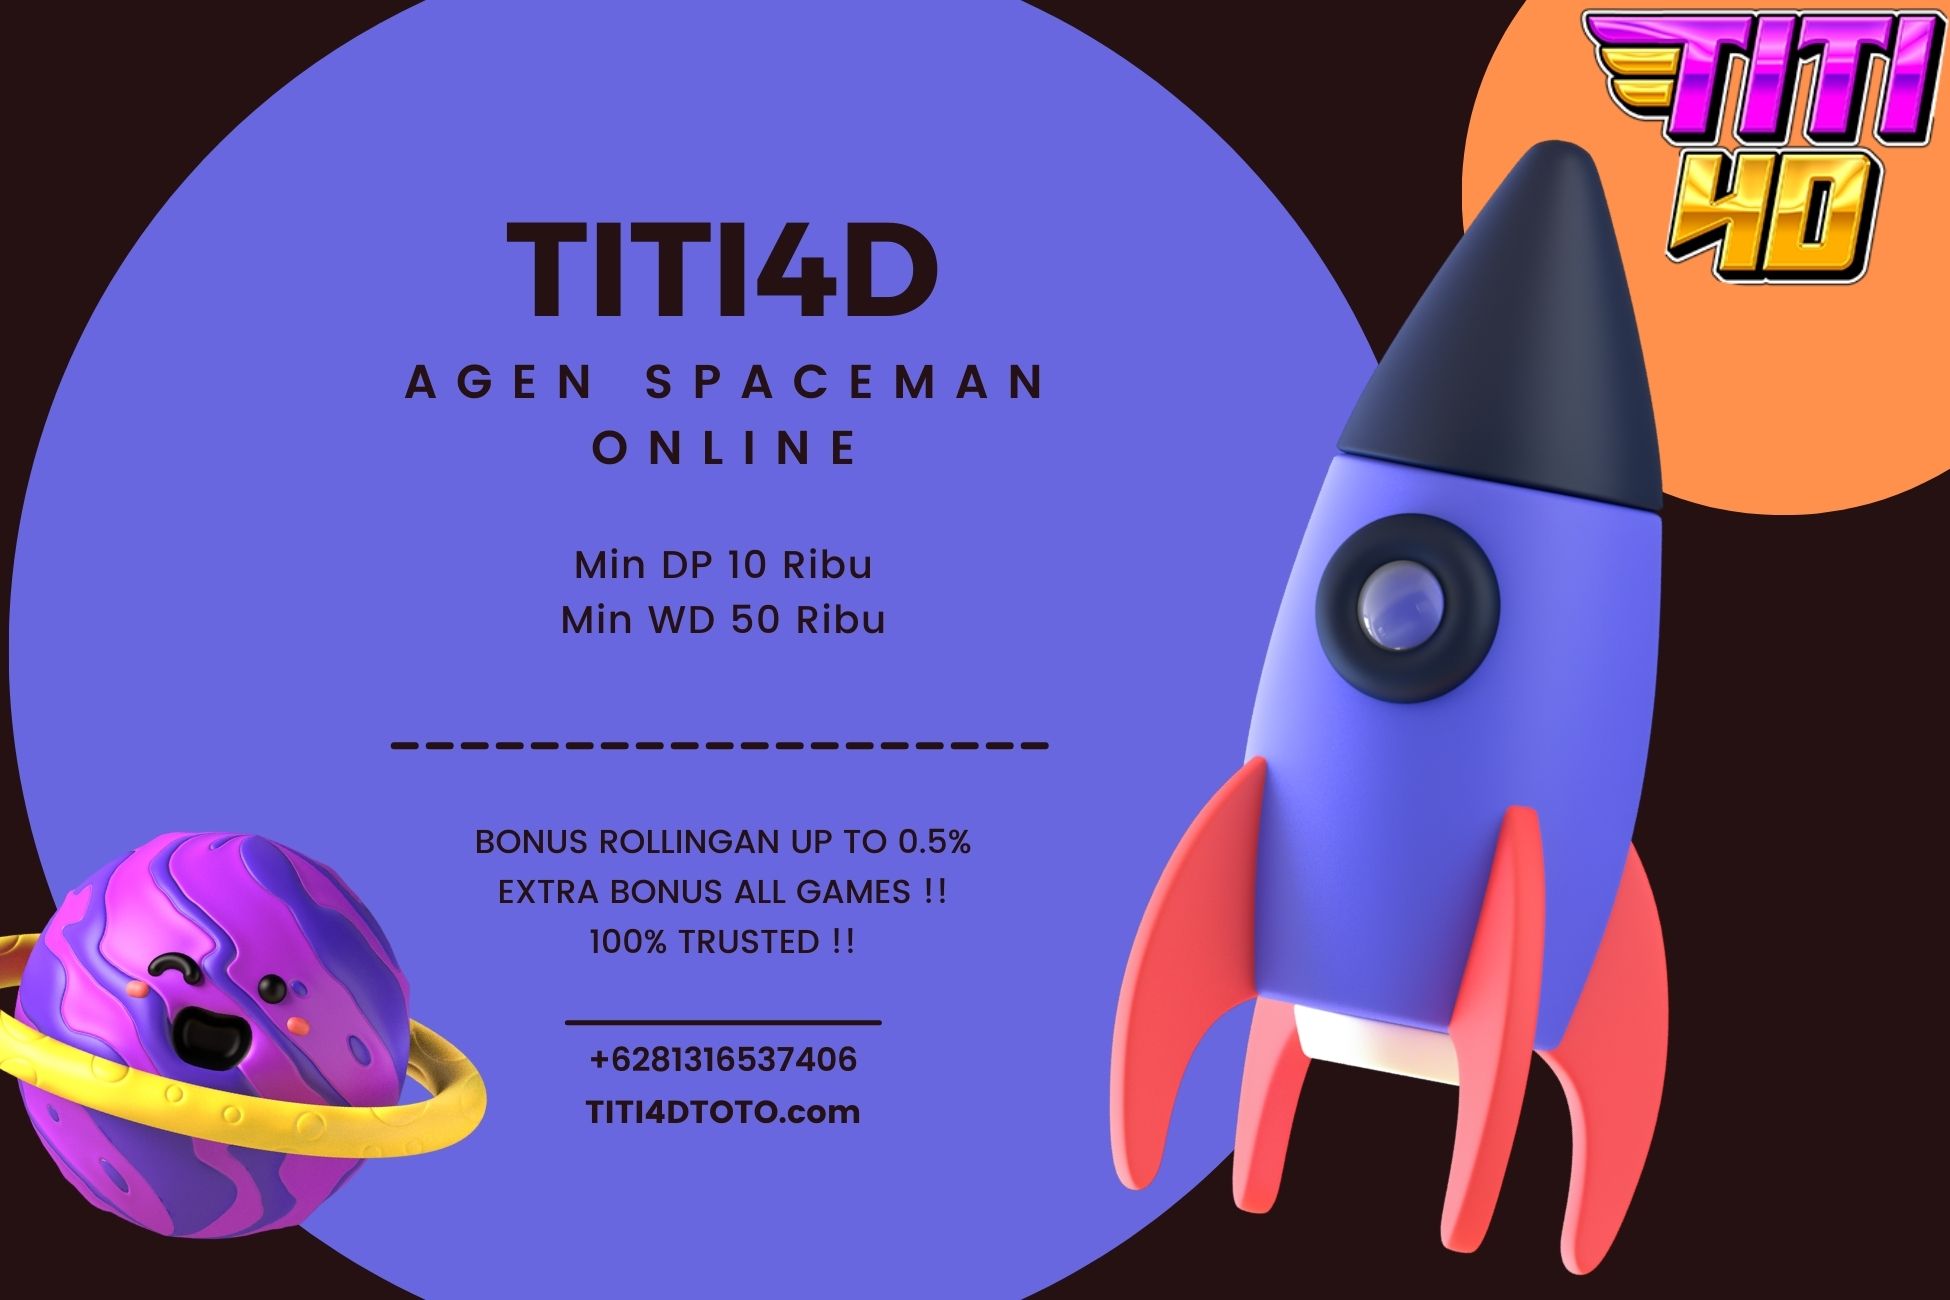 Agen Spaceman Online Titi4D